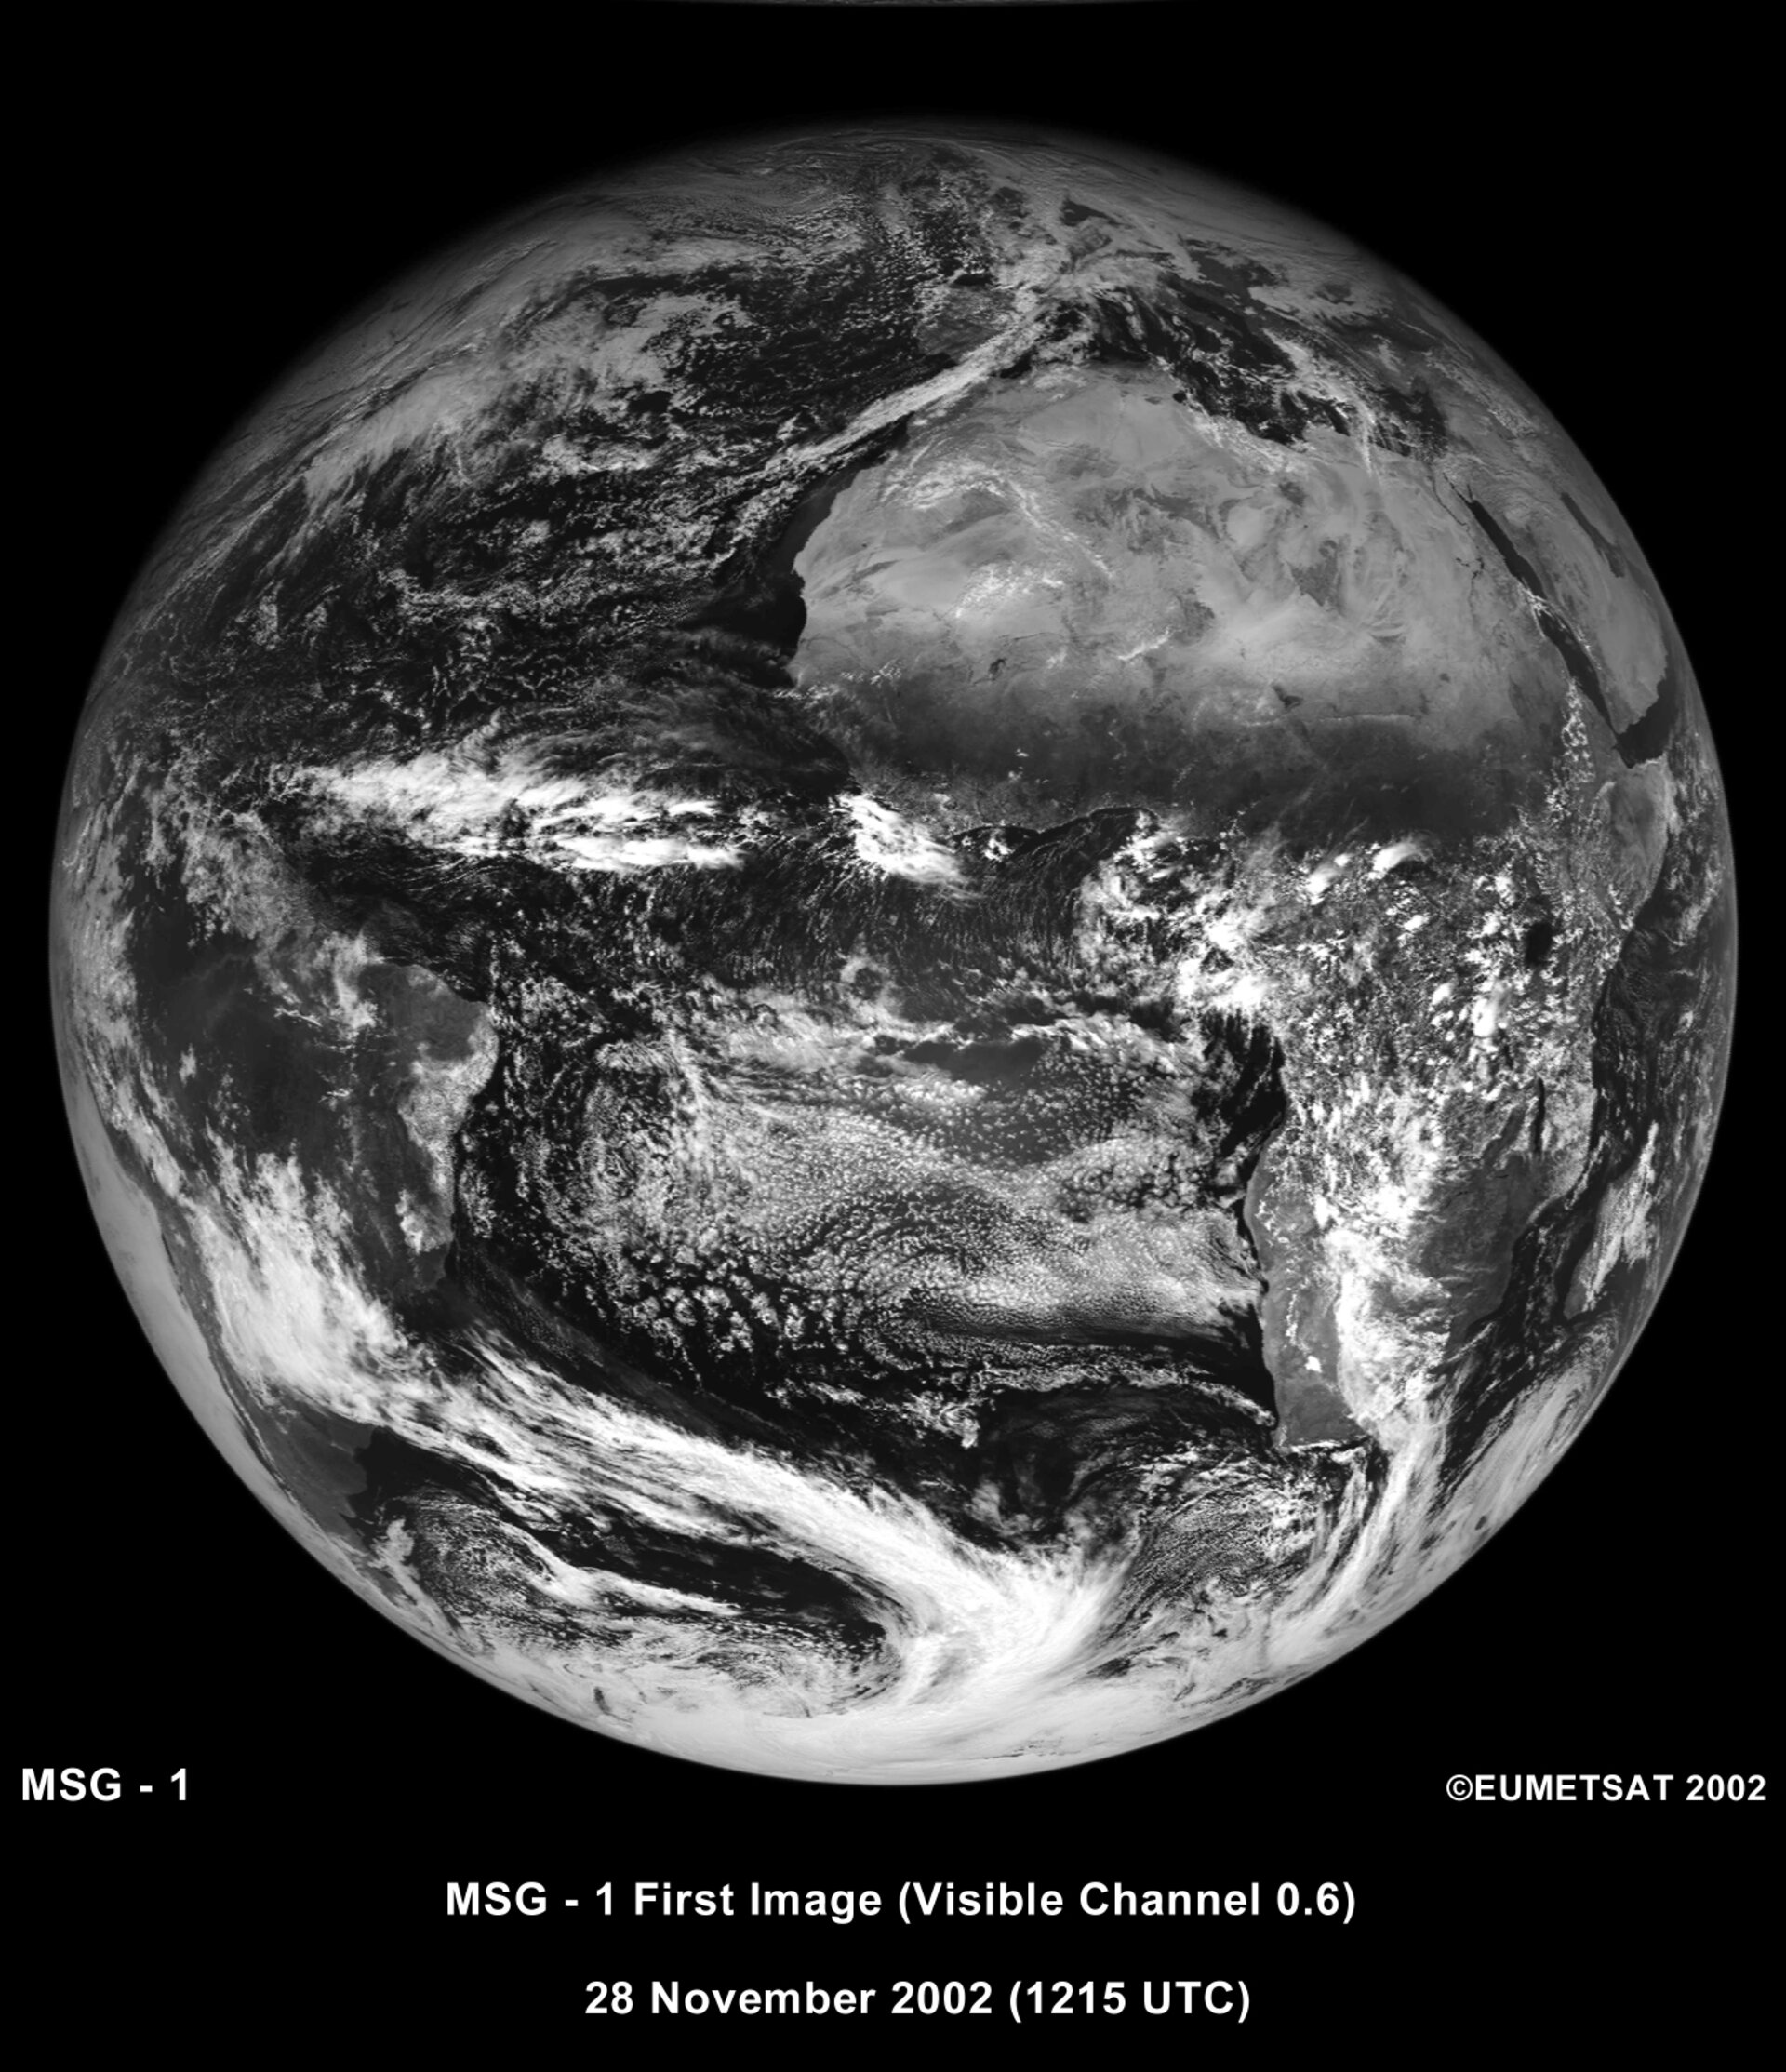 MSG - 1 First image - 28 November 2002